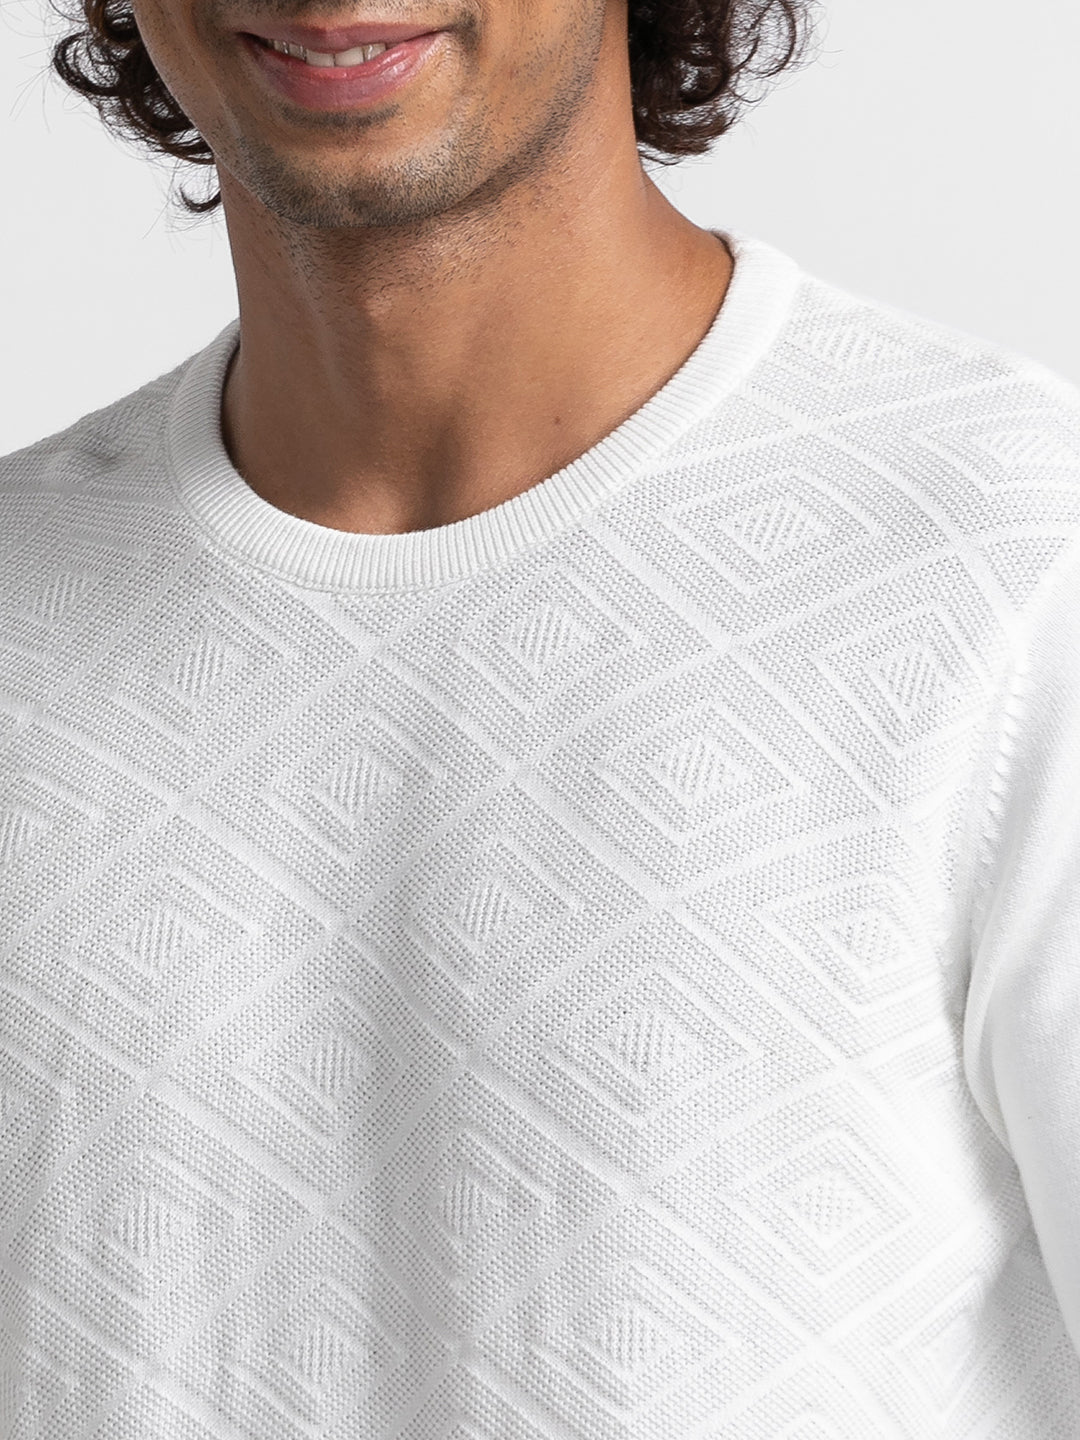 Spykar Ecru Cotton Full Sleeve Casual Sweater For Men